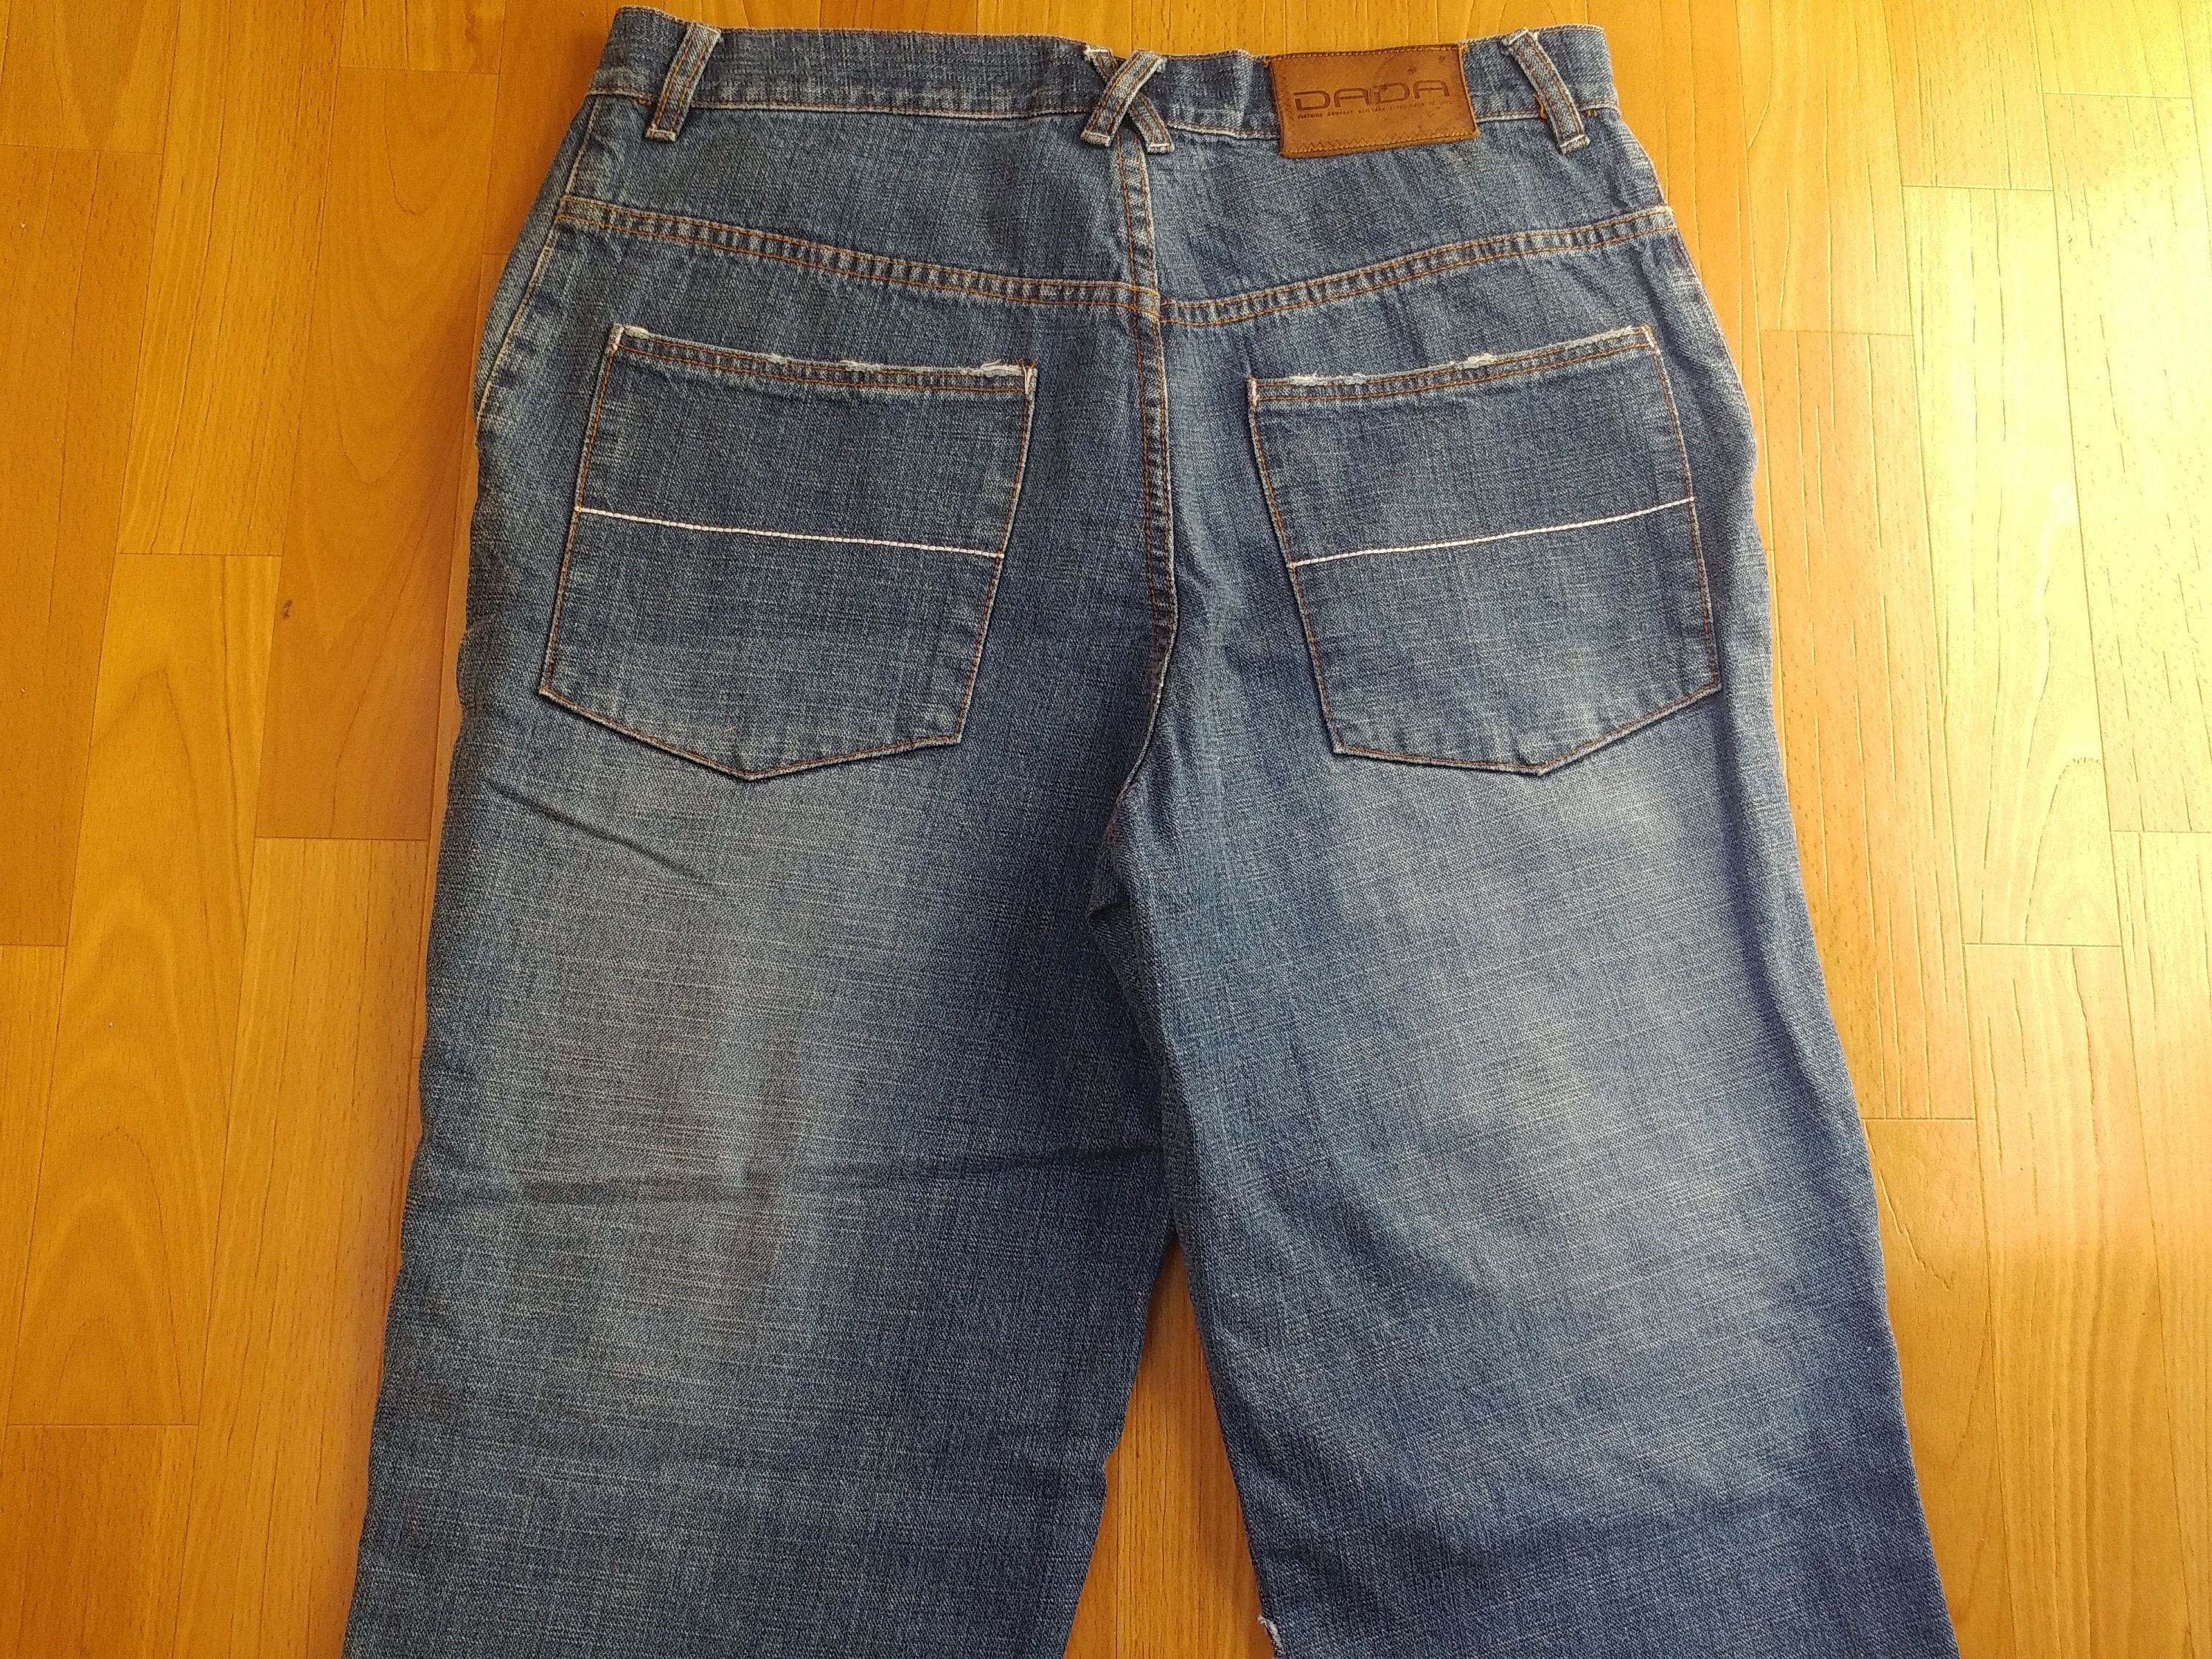 Dada Supreme Jeans Shorts Blue Vintage Damani Baggy Jeans 